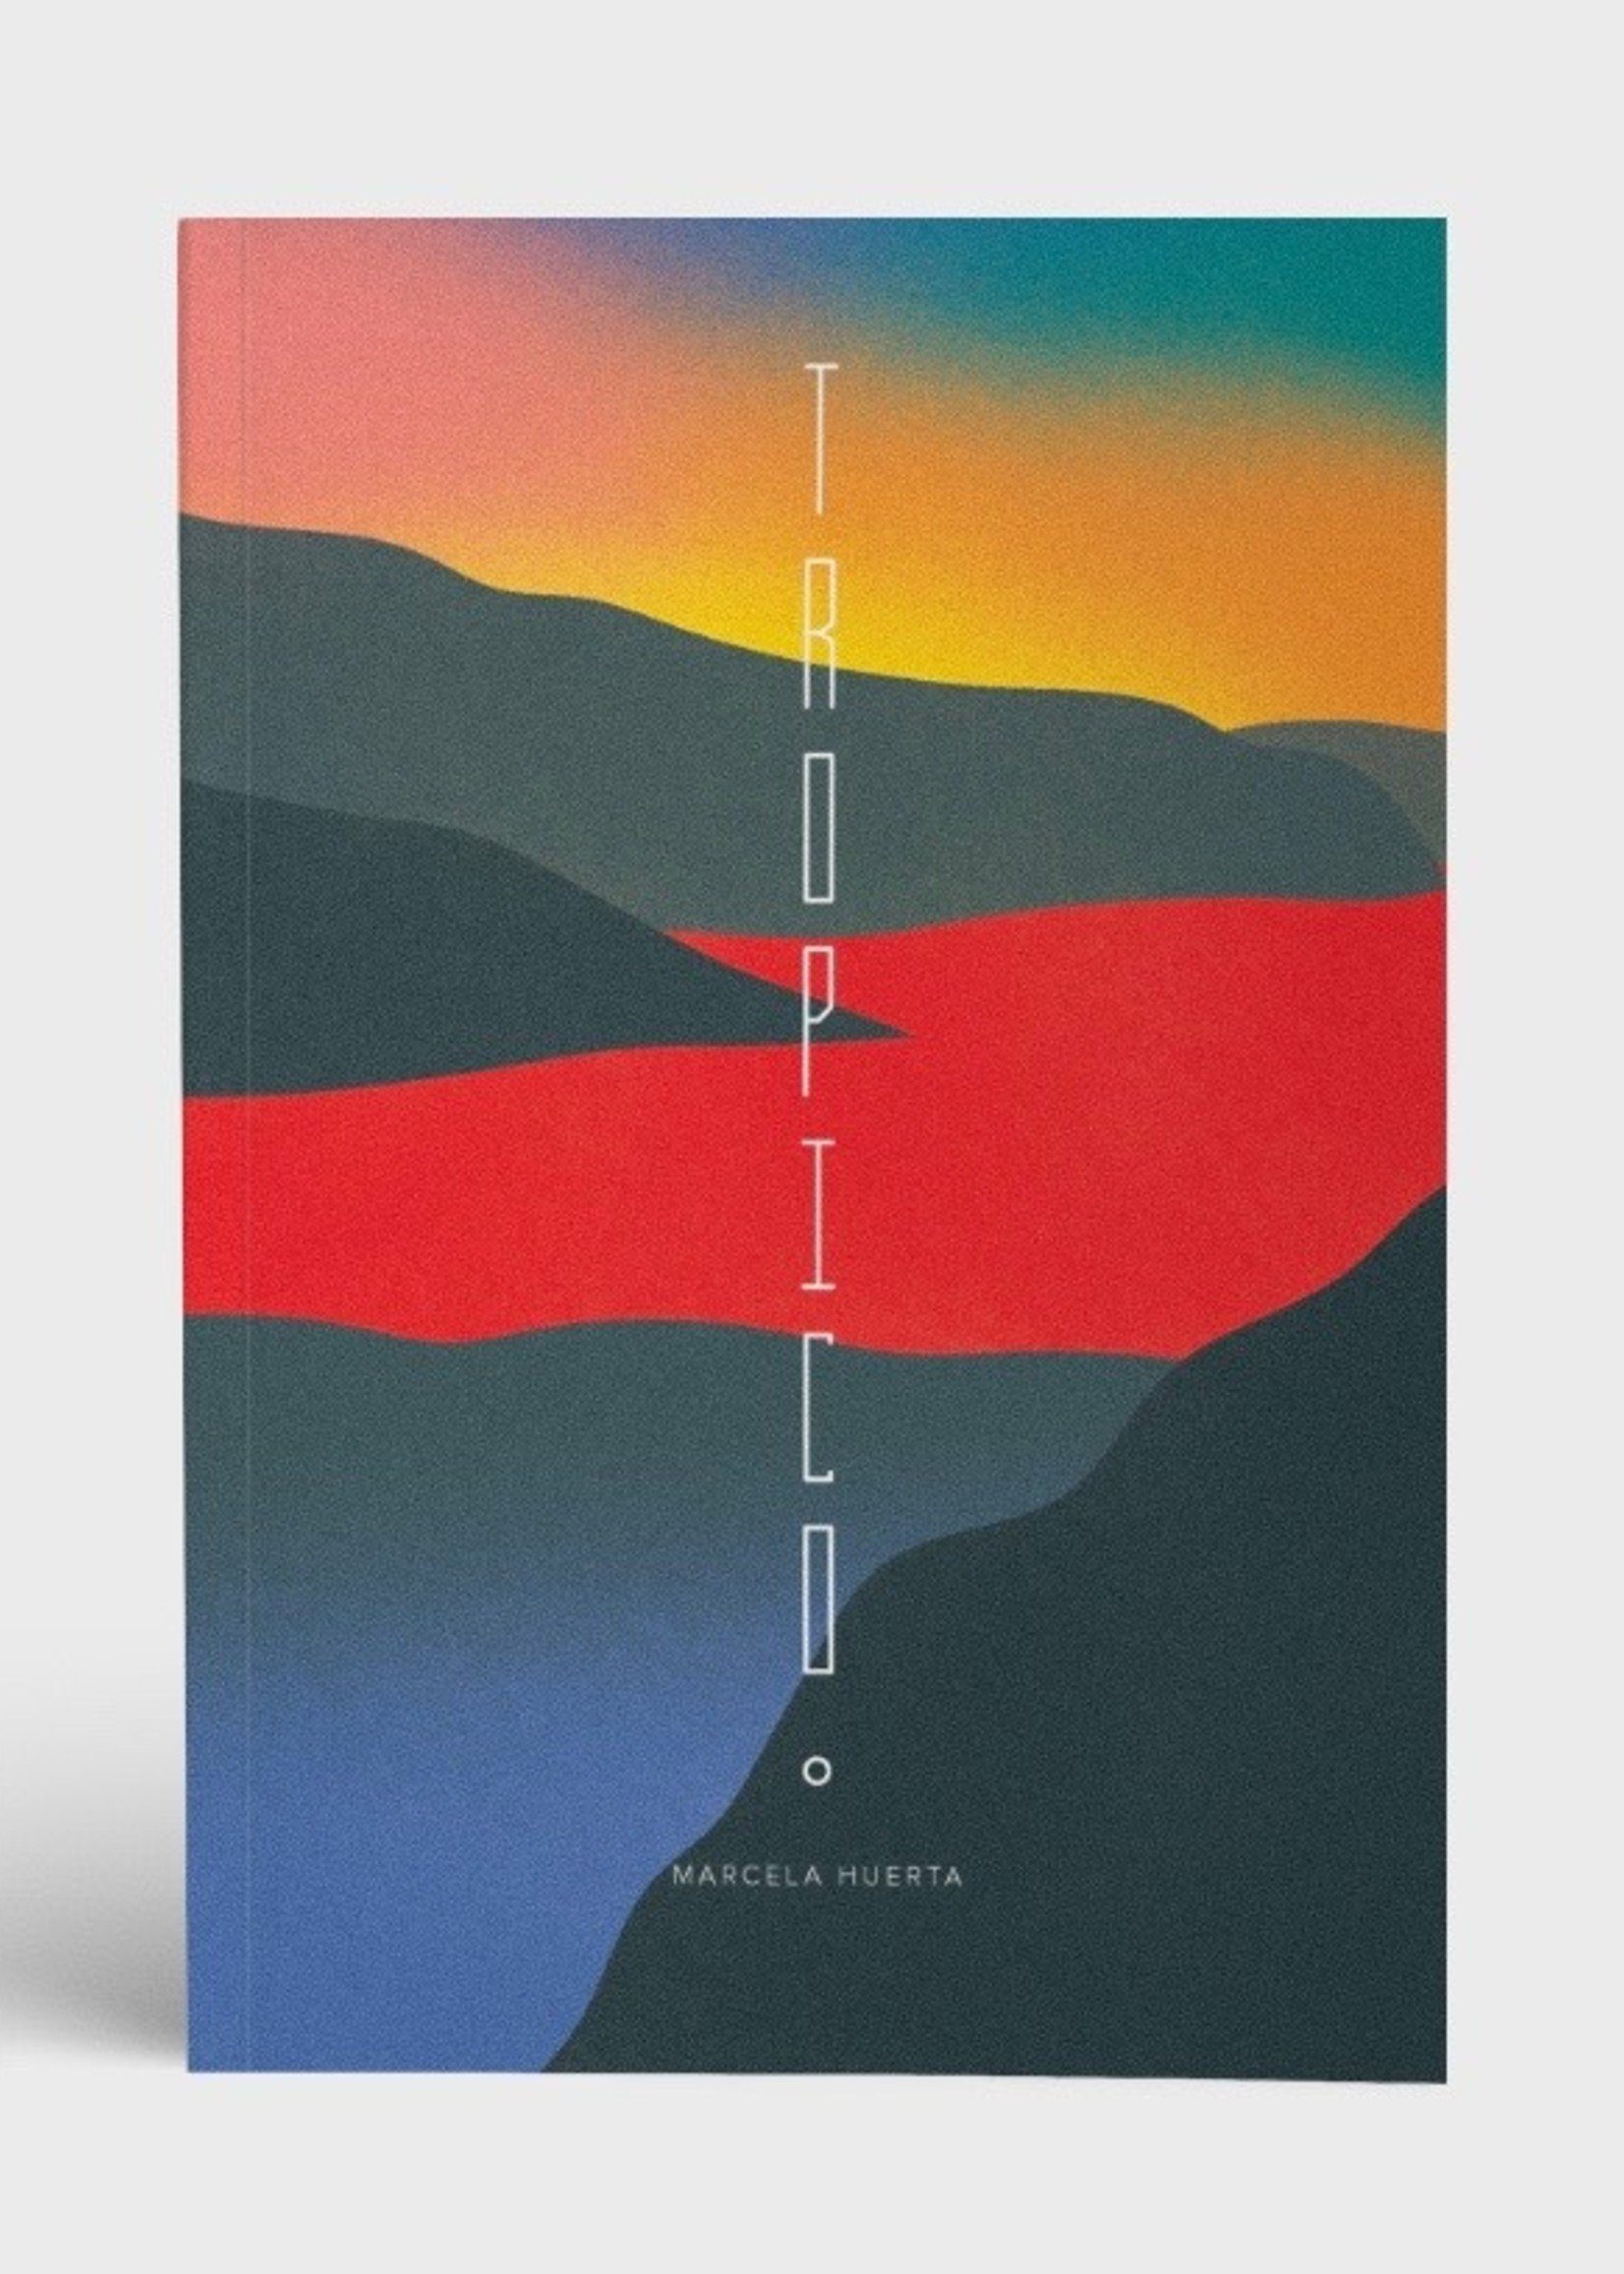 Metatron Press "Tropico" by Marcela Huerta, published by Metatron Press